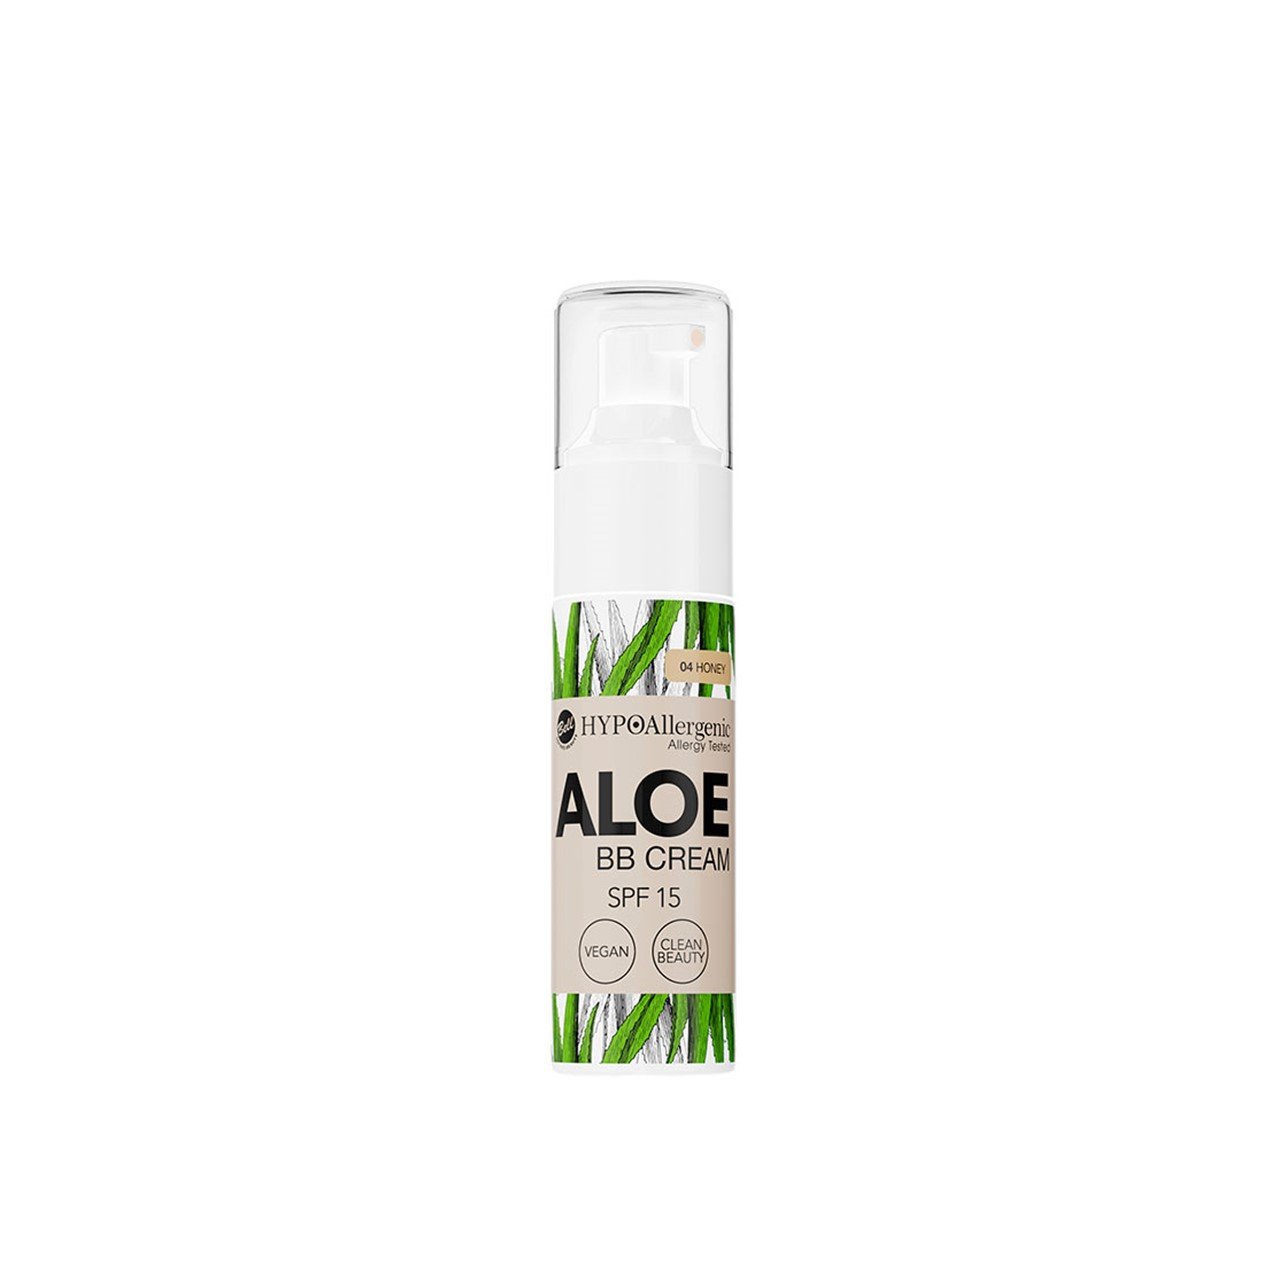 Bell HYPOAllergenic Aloe BB Cream SPF15 04 Honey 20g (0.71oz)